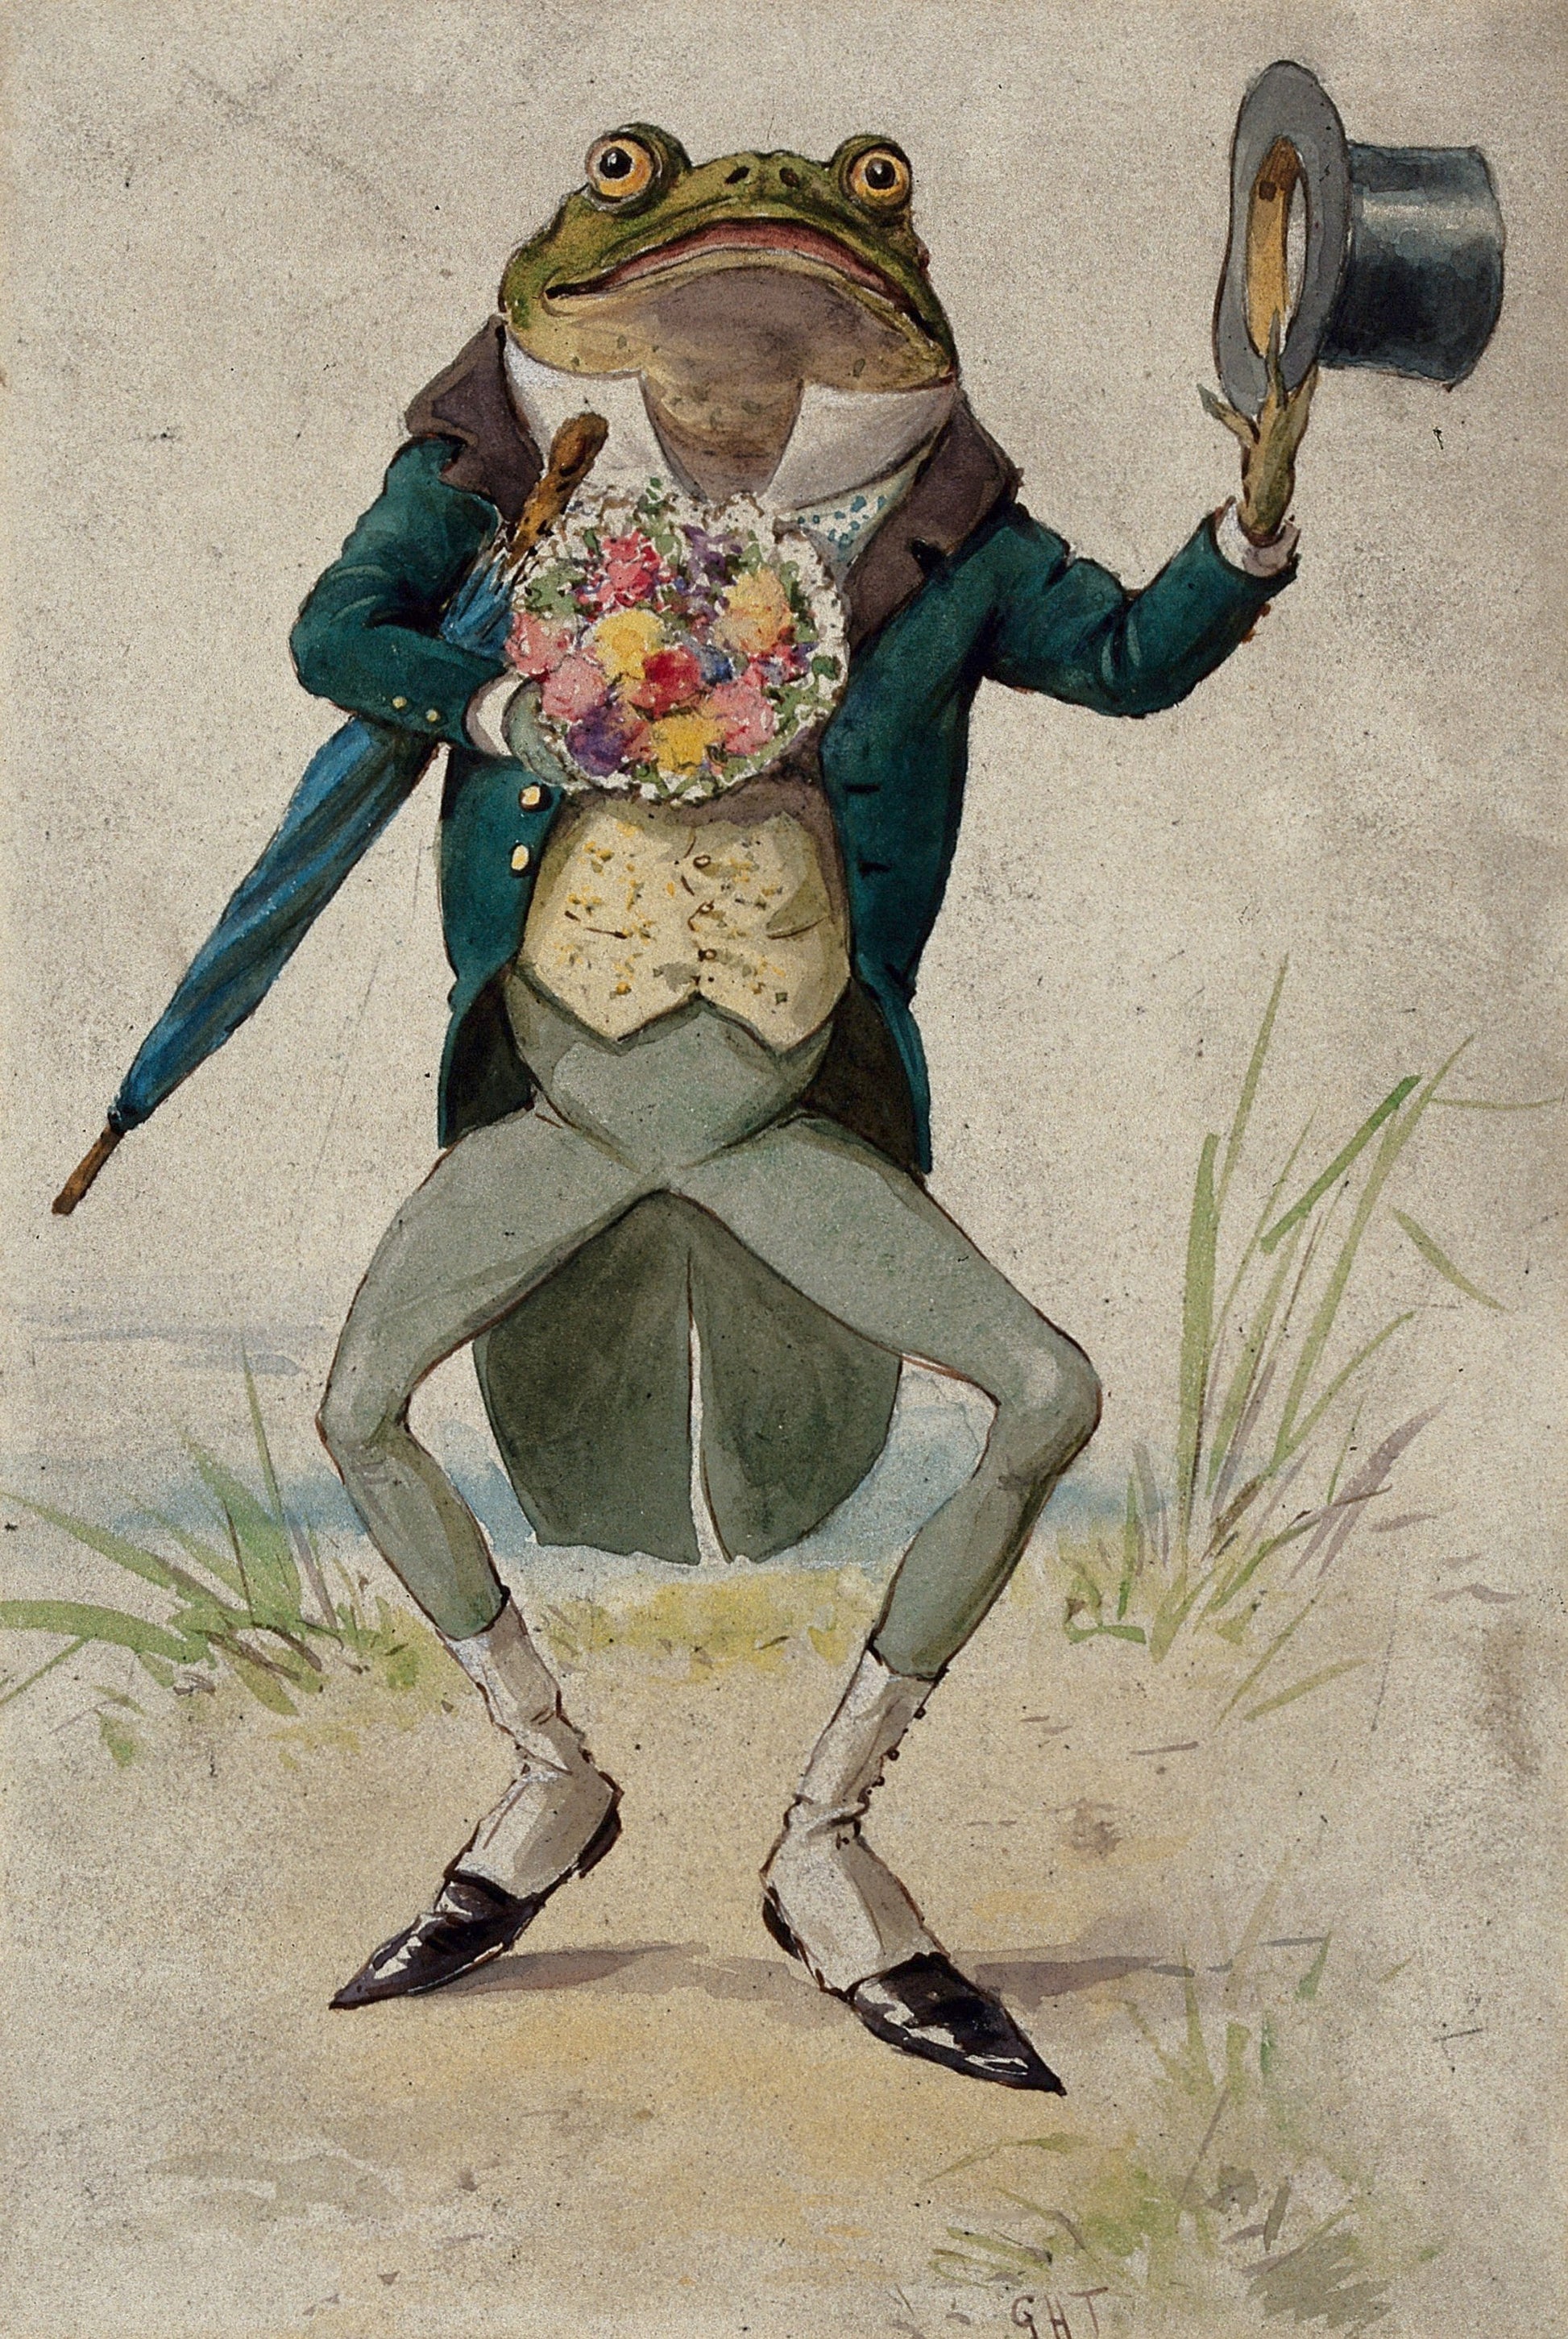 Vintage Frog art (c1900) | George Hope Tait  The Trumpet Shop   